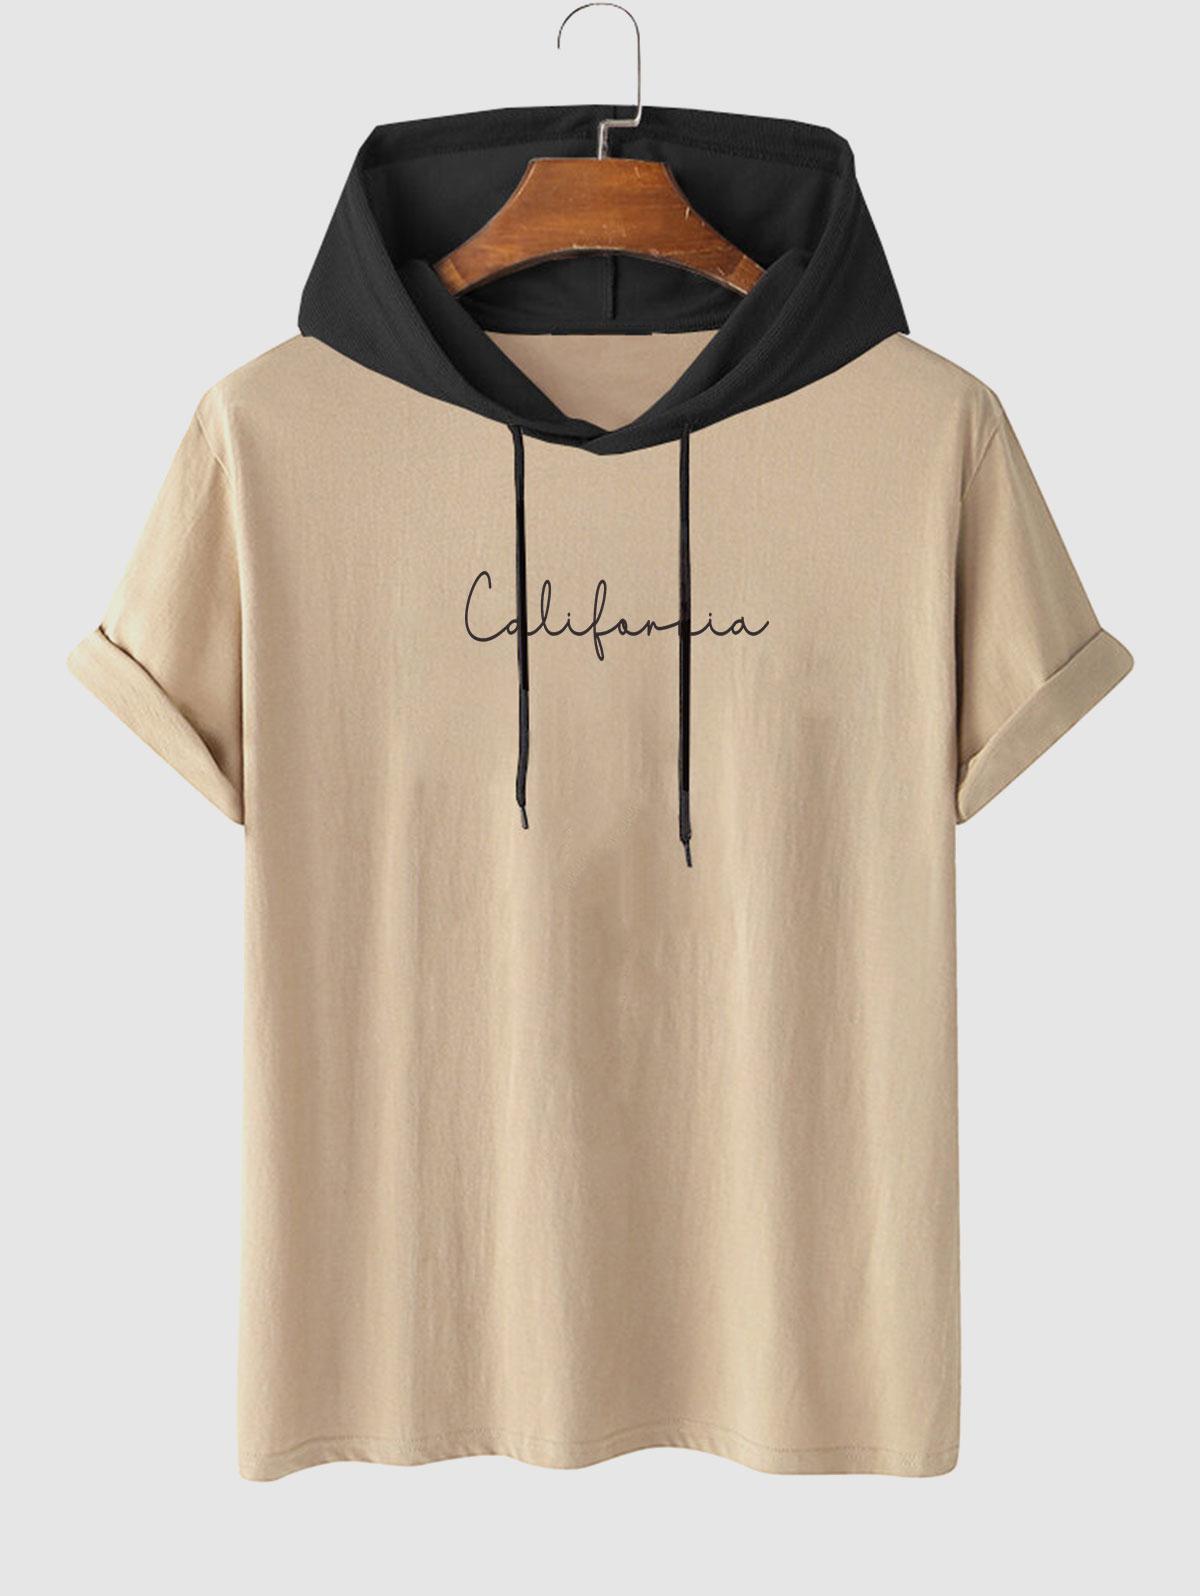 California Letter Printed Drawstring Streetwear Hooded T-shirt Xl Light coffee